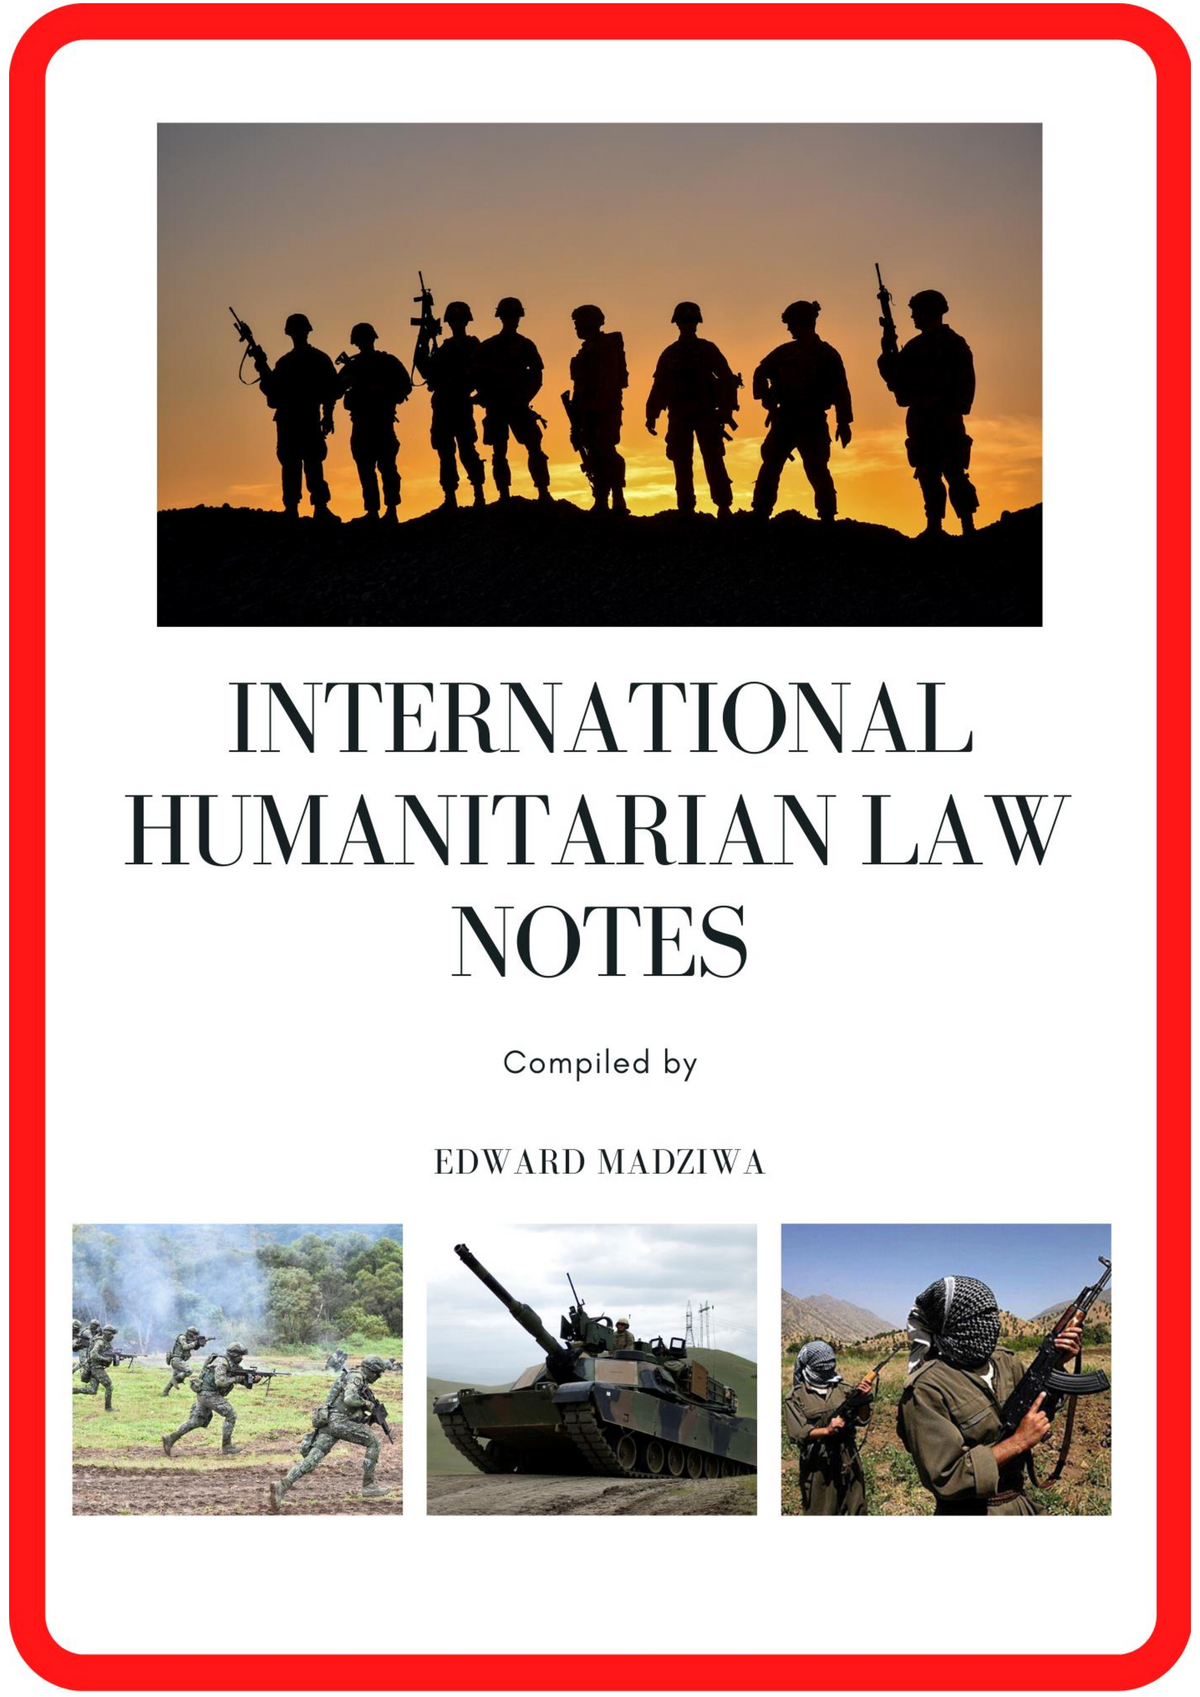 thesis topics in international humanitarian law